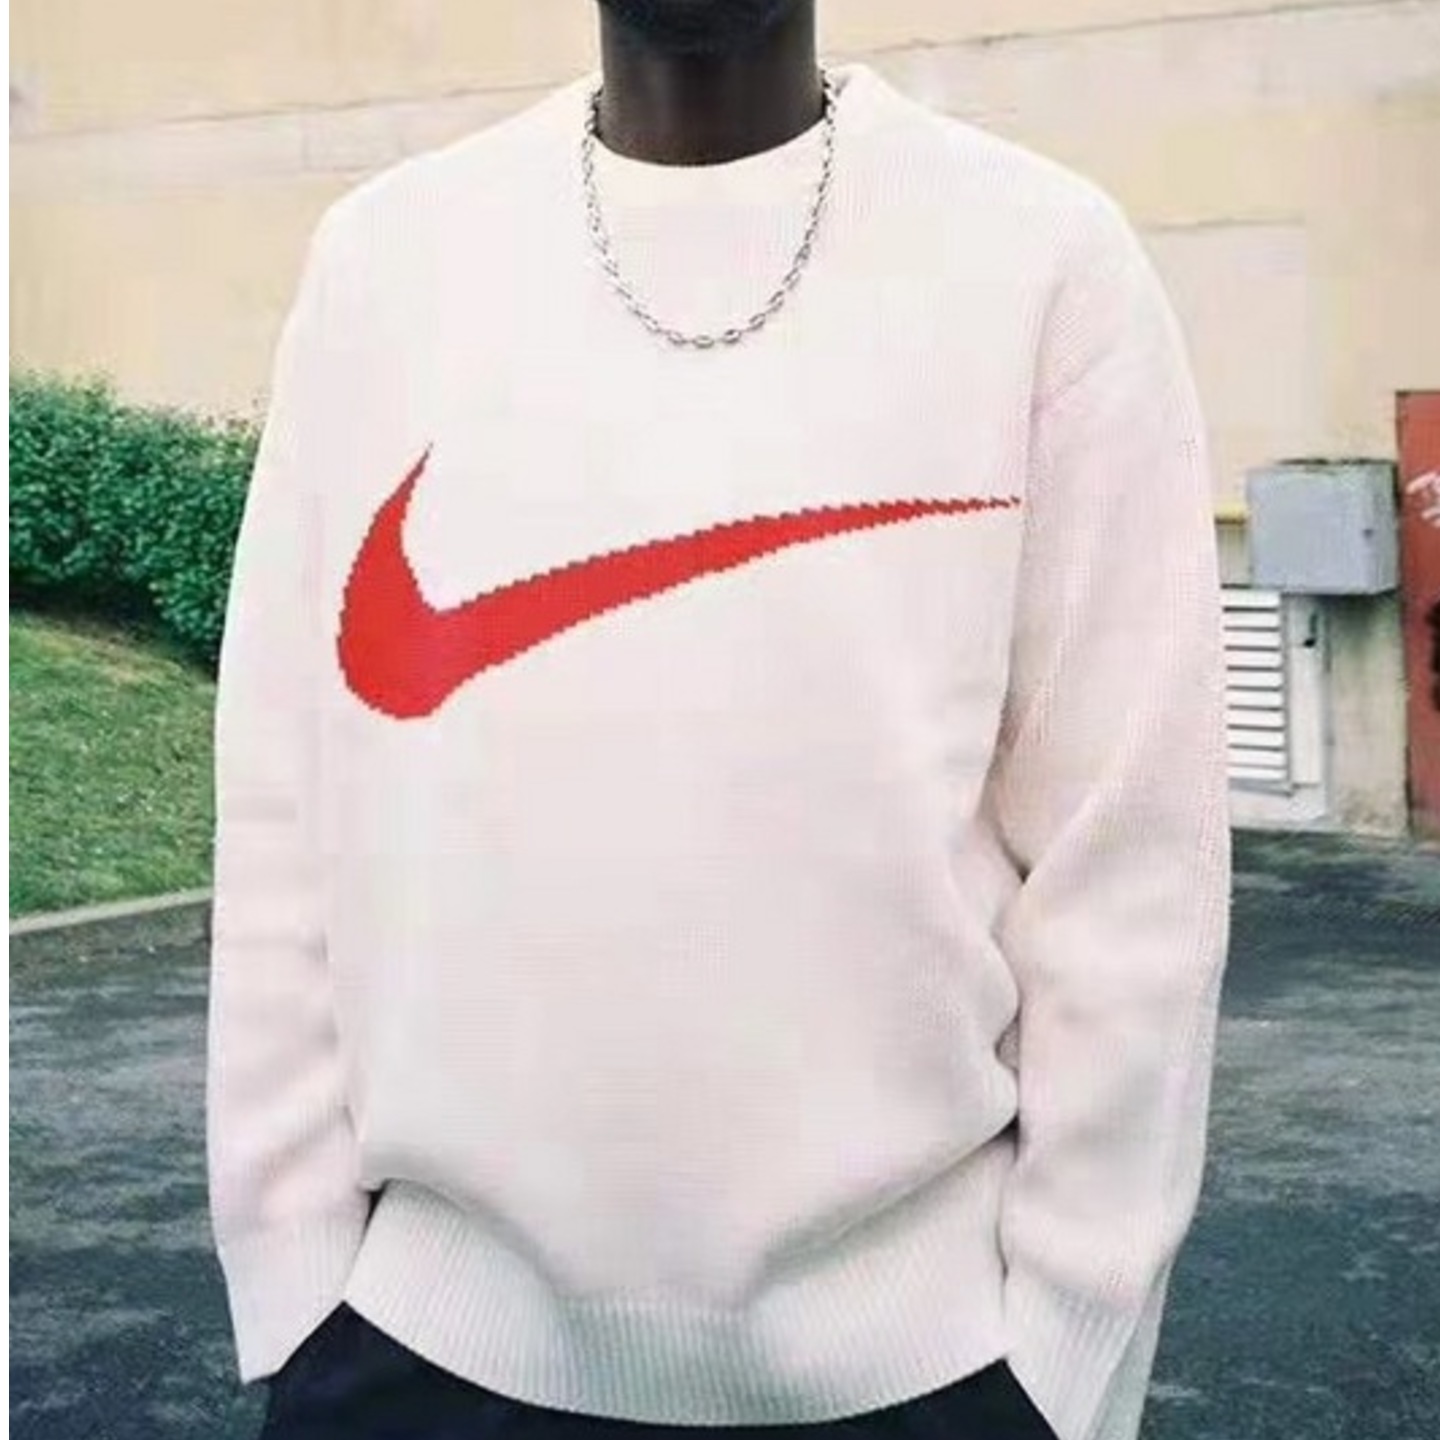 Supreme Nike Swoosh Sweater White